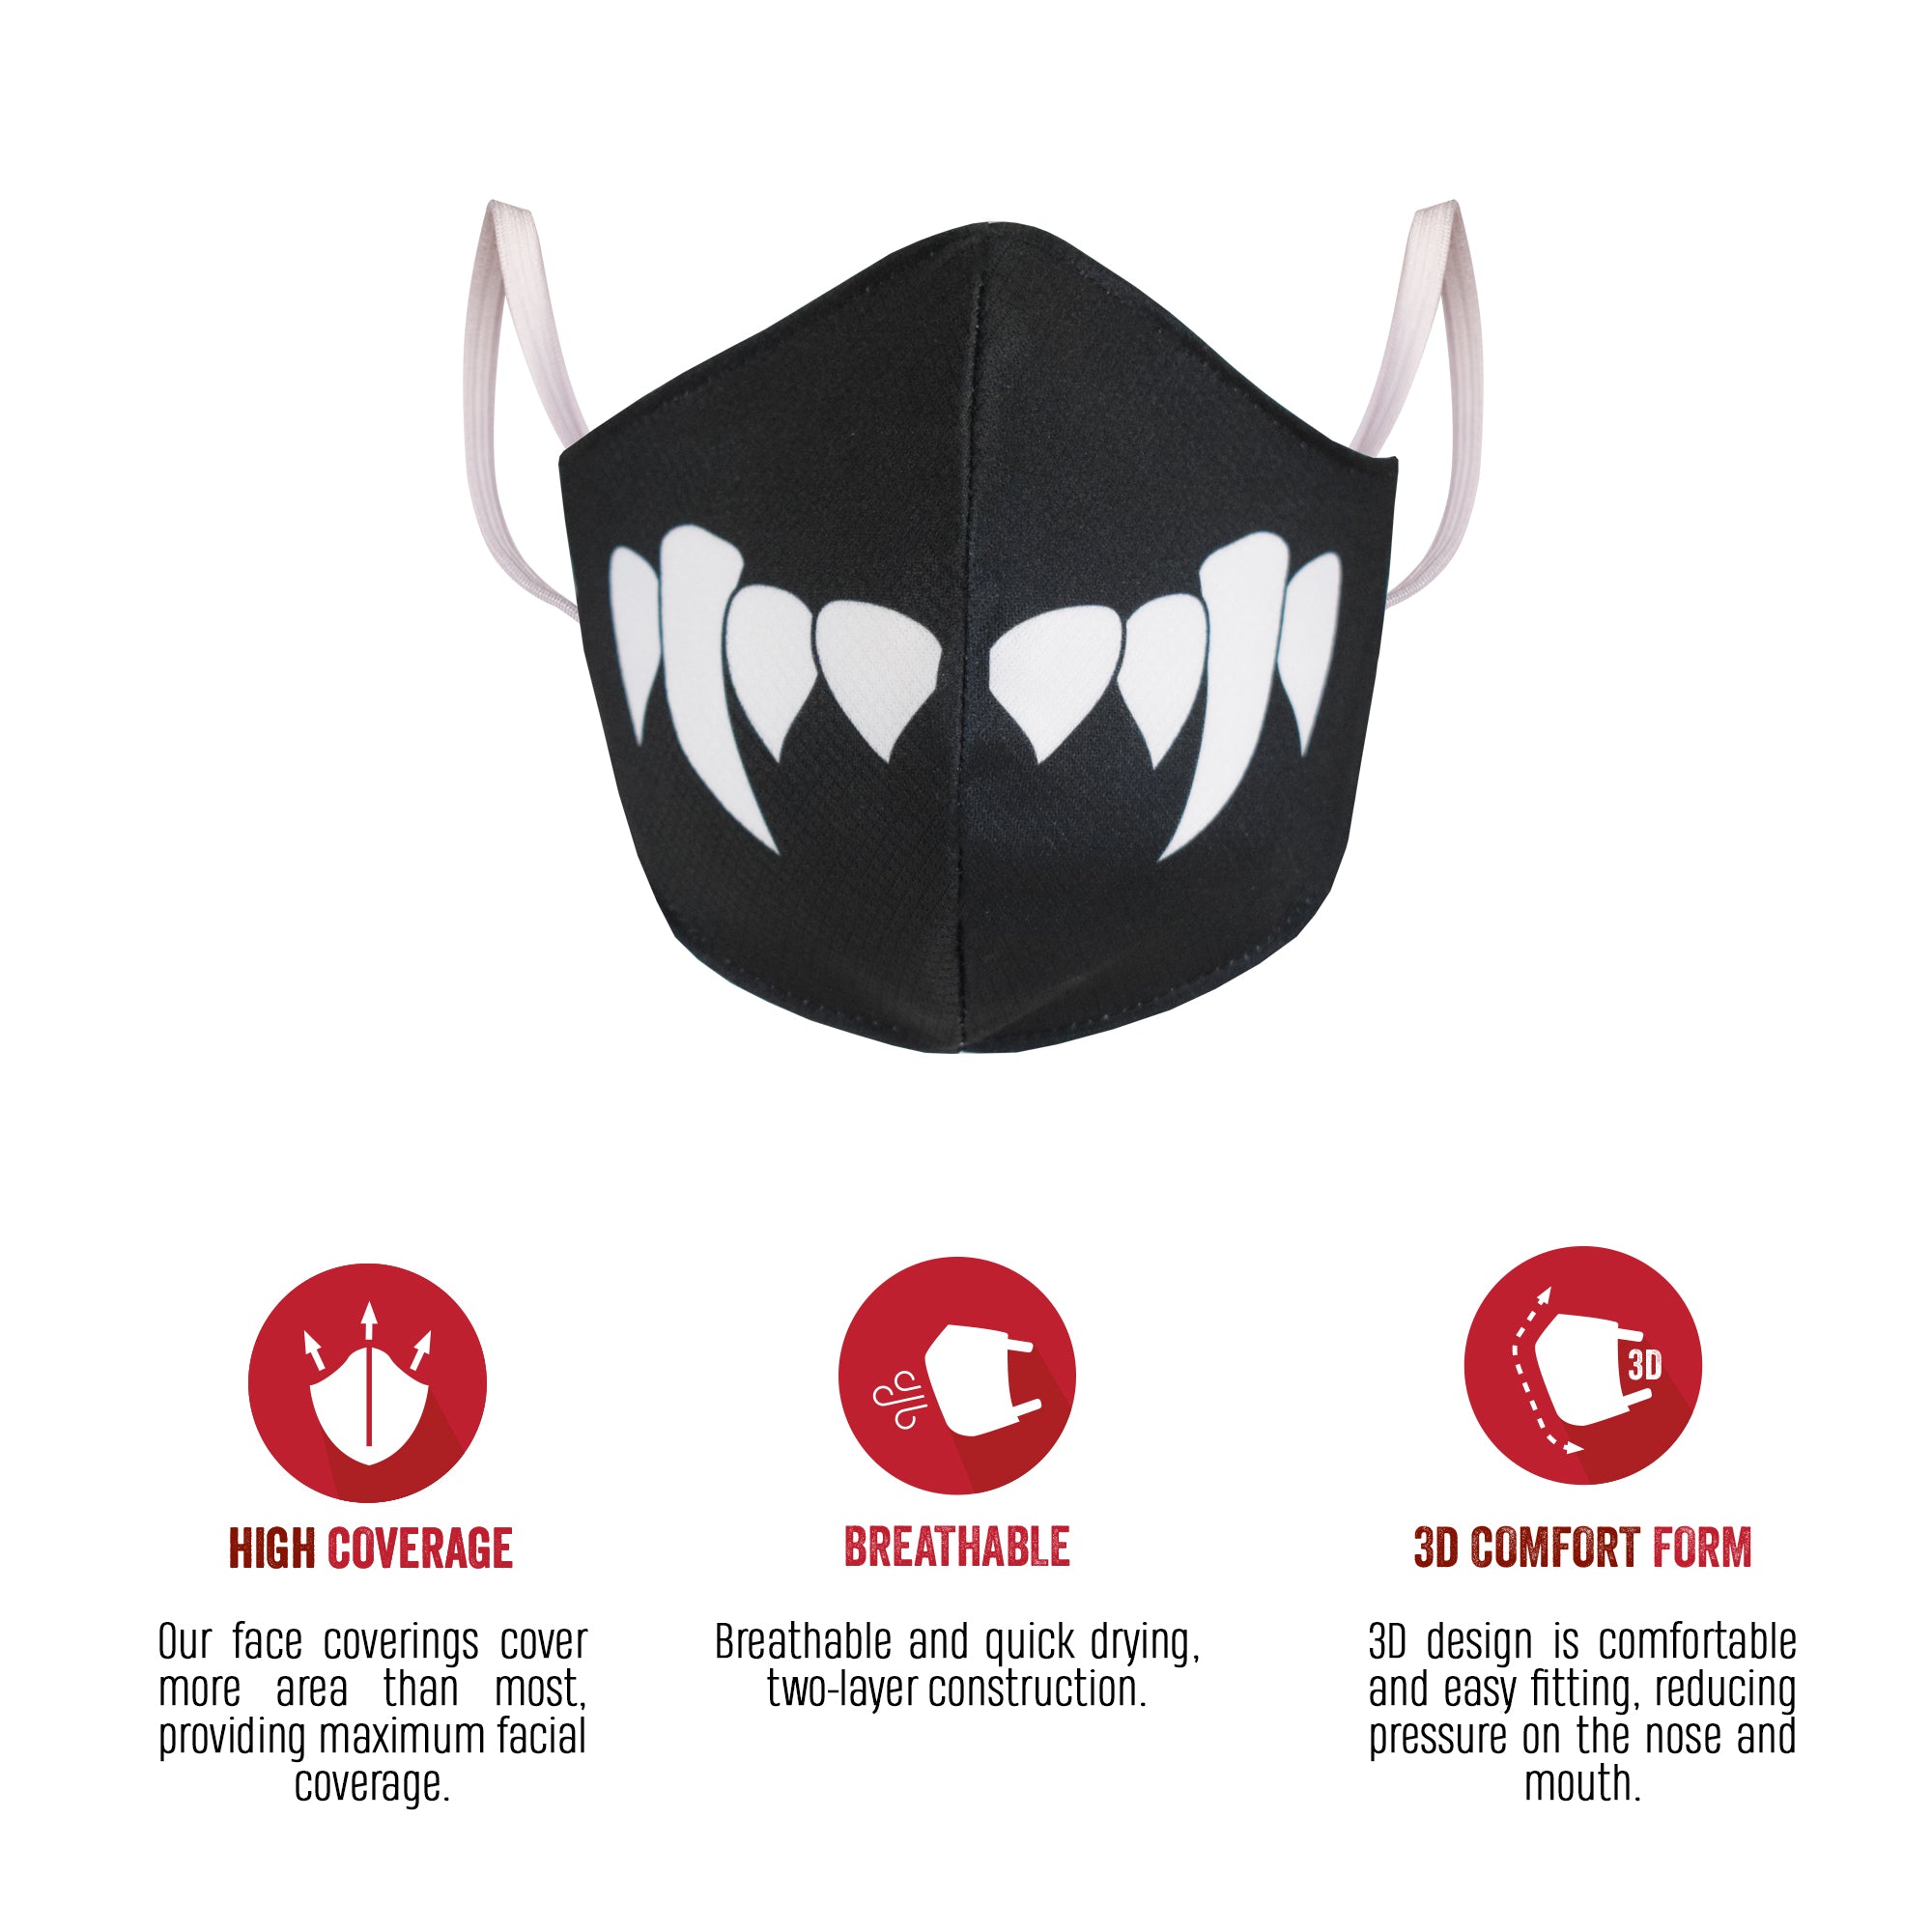 SAFEJAWZ Performance Face Mask - FANGZ. Anti-Microbial, Washable, 2-Layer Face Mask. - SAFEJAWZ gum shield